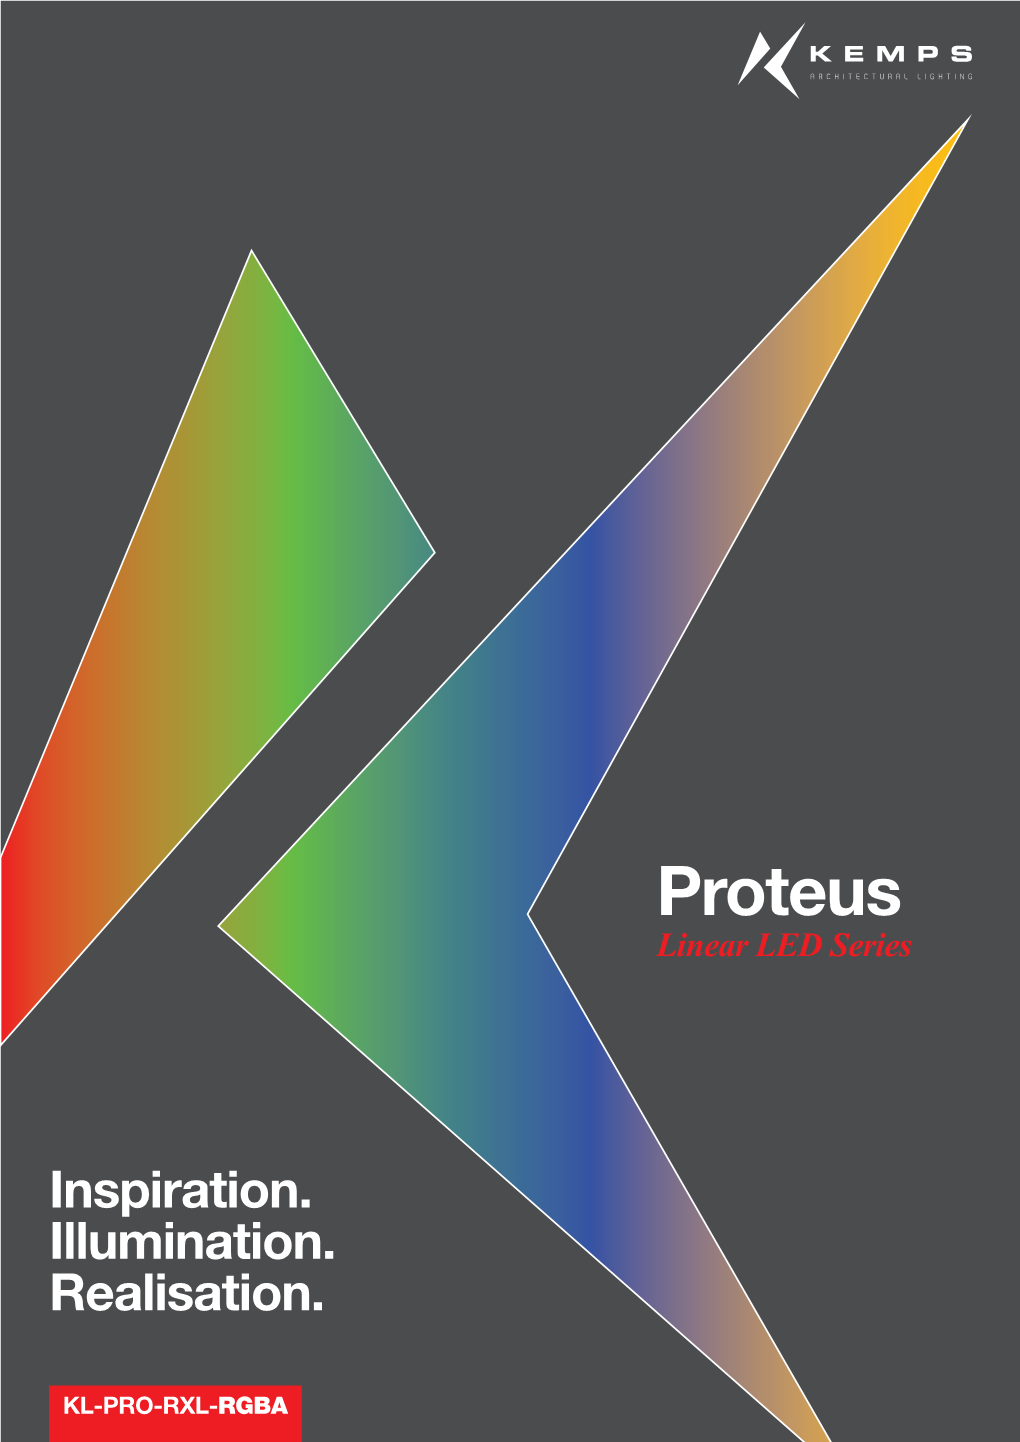 Proteus Linear LED Series